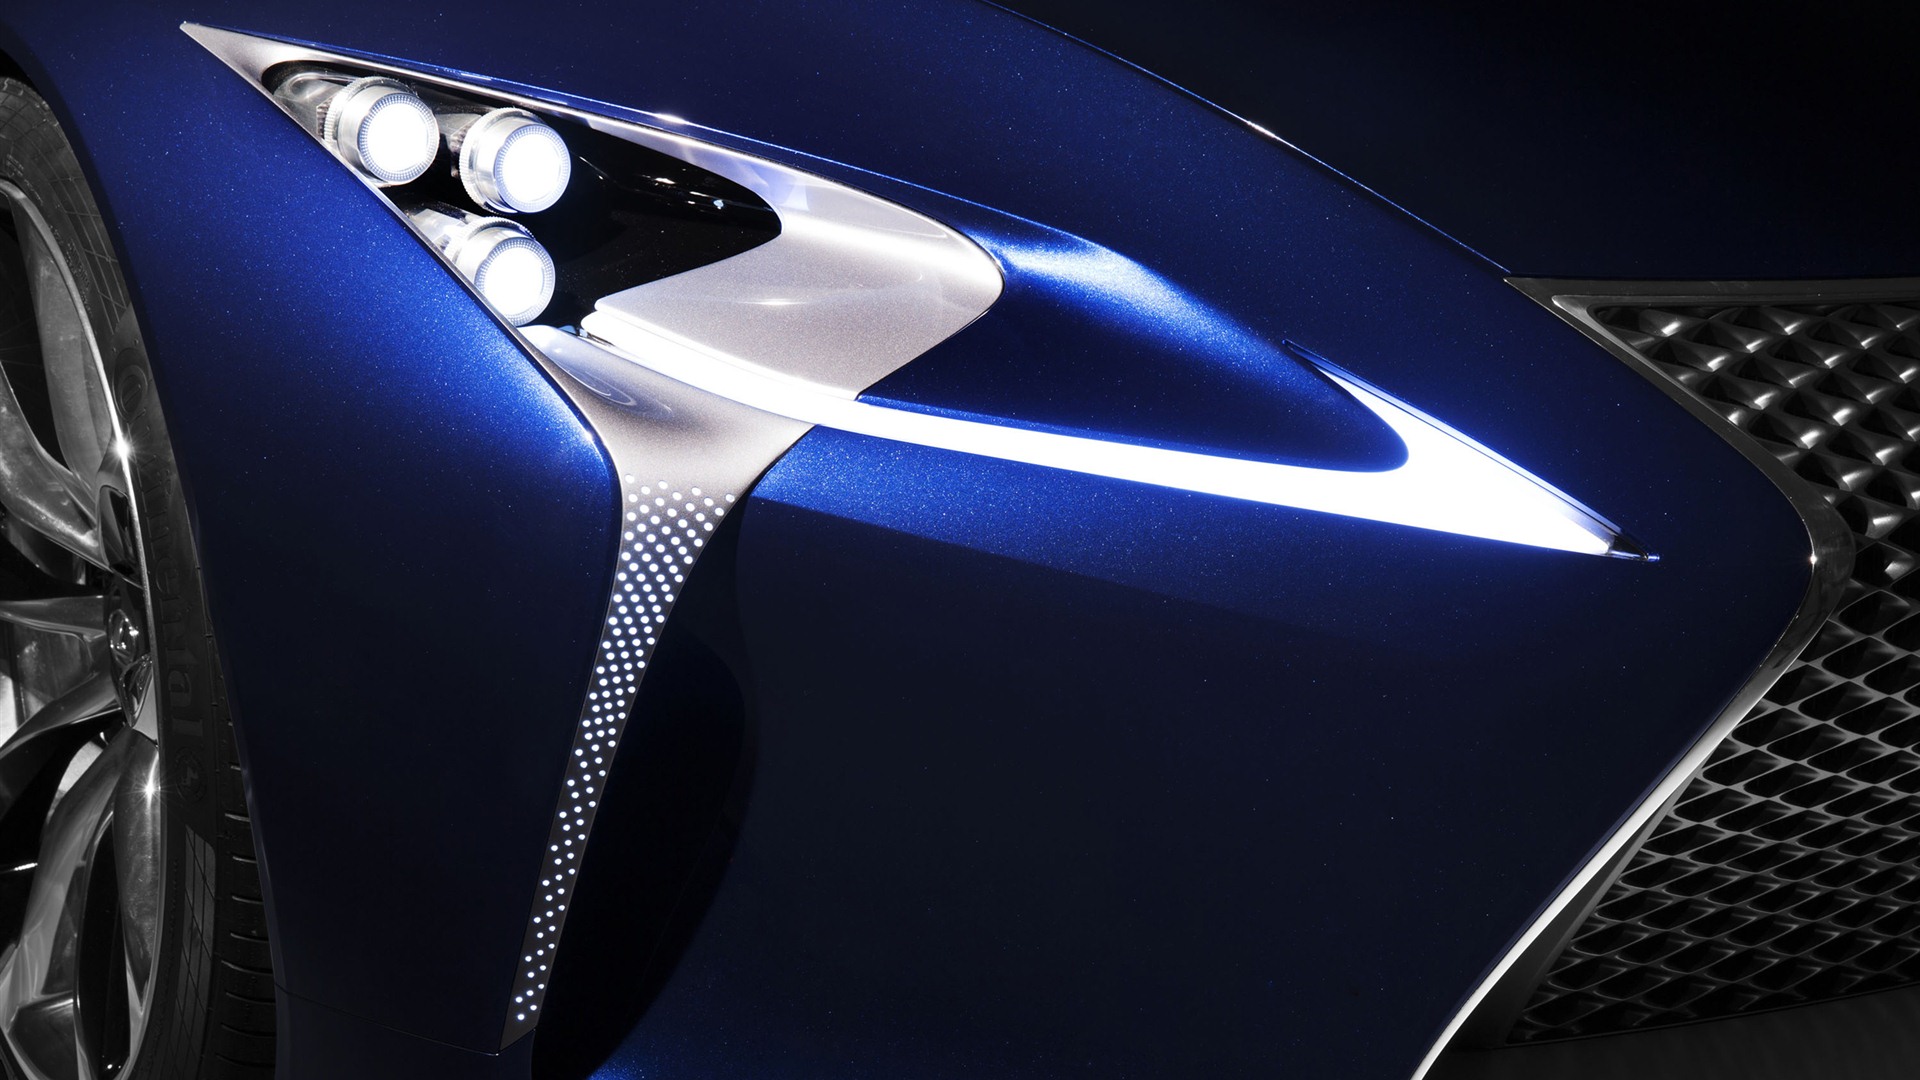 2012 Lexus LF-LC Blue concept 雷克萨斯 蓝色概念车 高清壁纸11 - 1920x1080